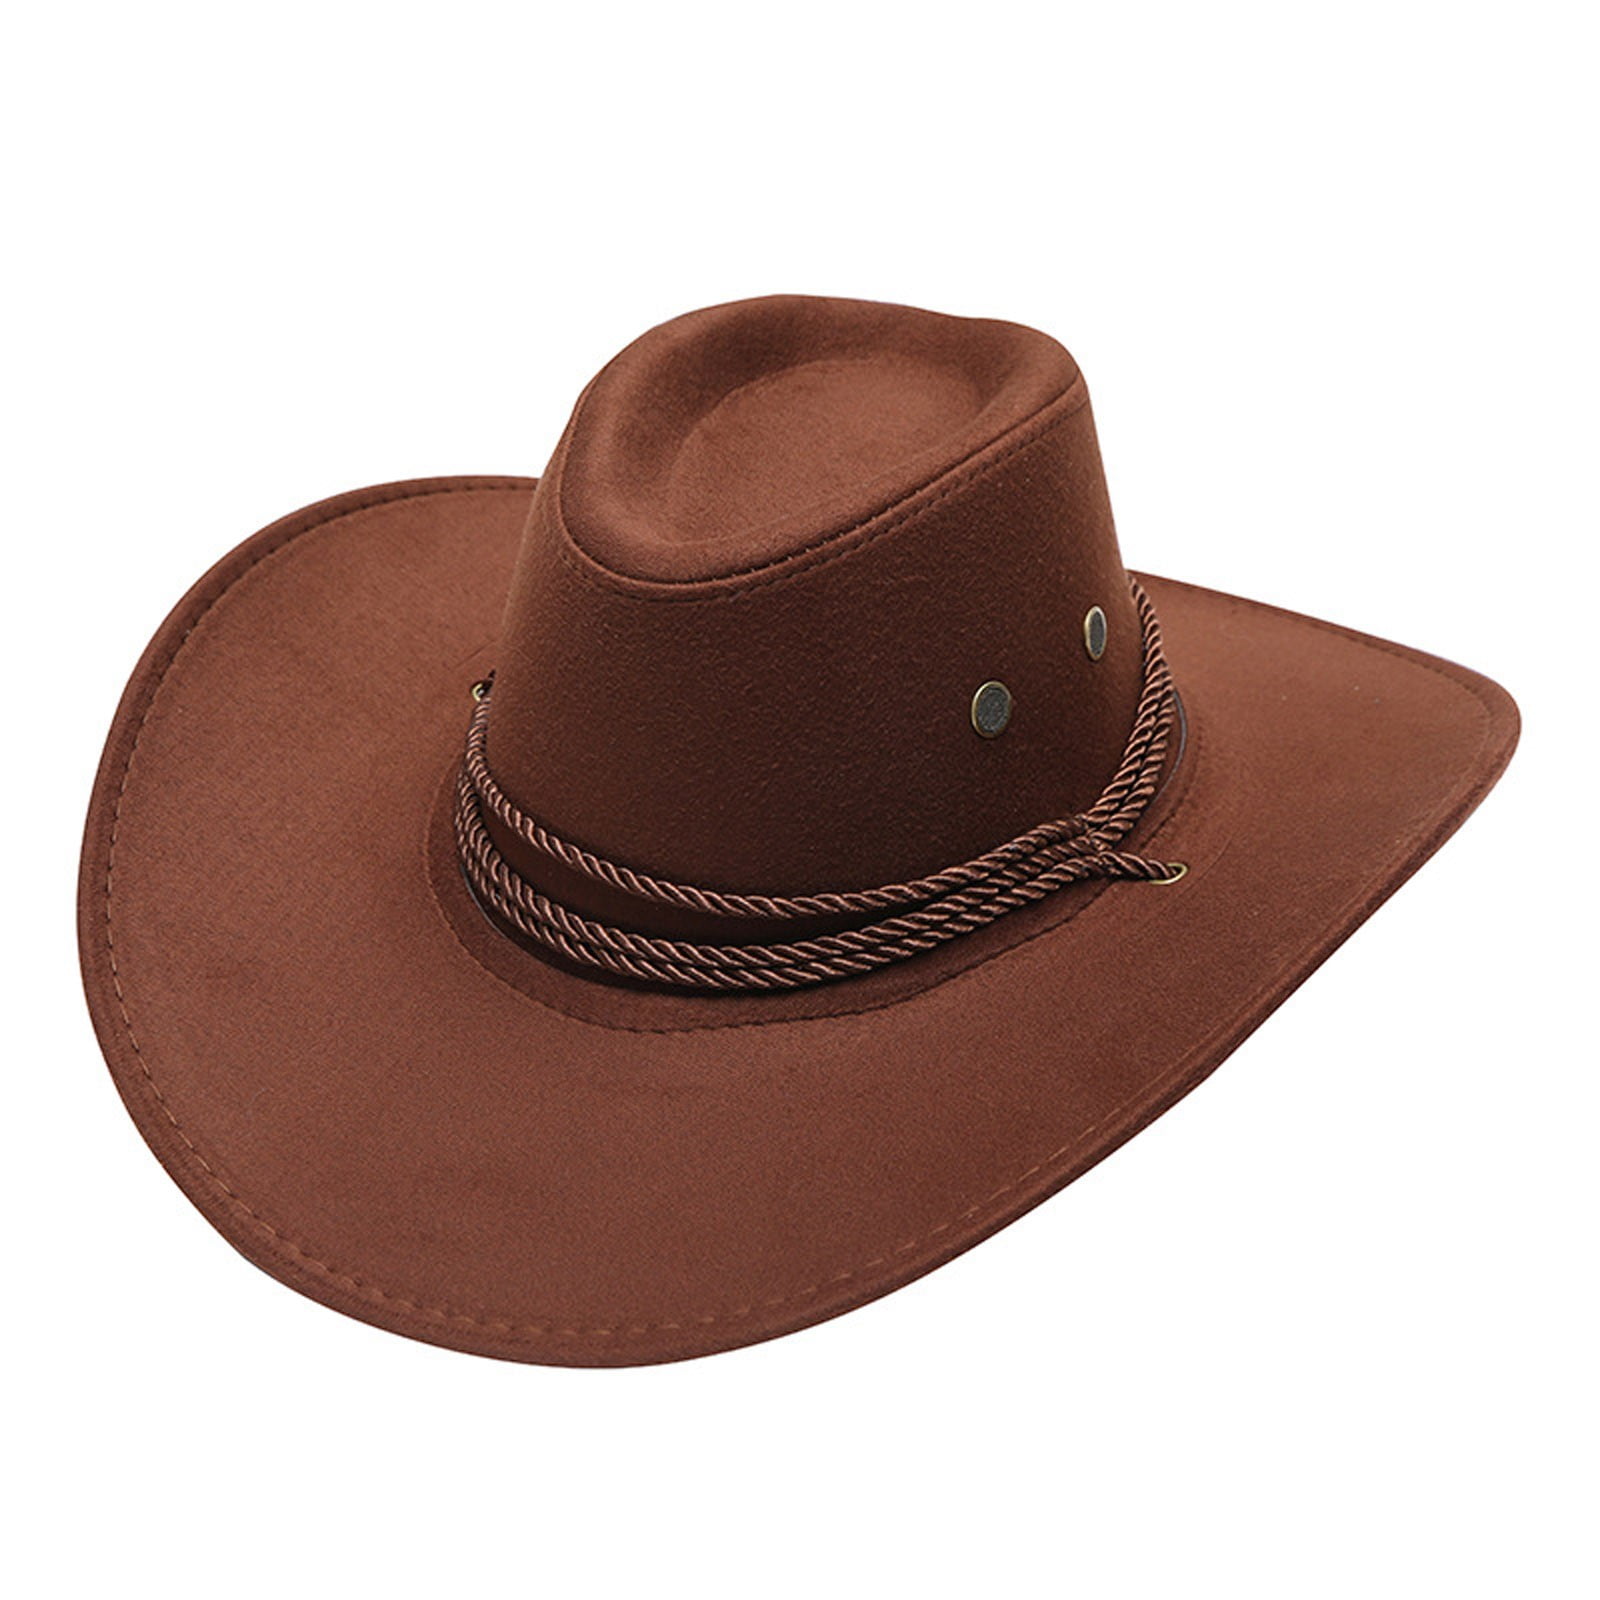 Adult Casual Solid Summer Western Fashion Cowboy Sun Hat Wide